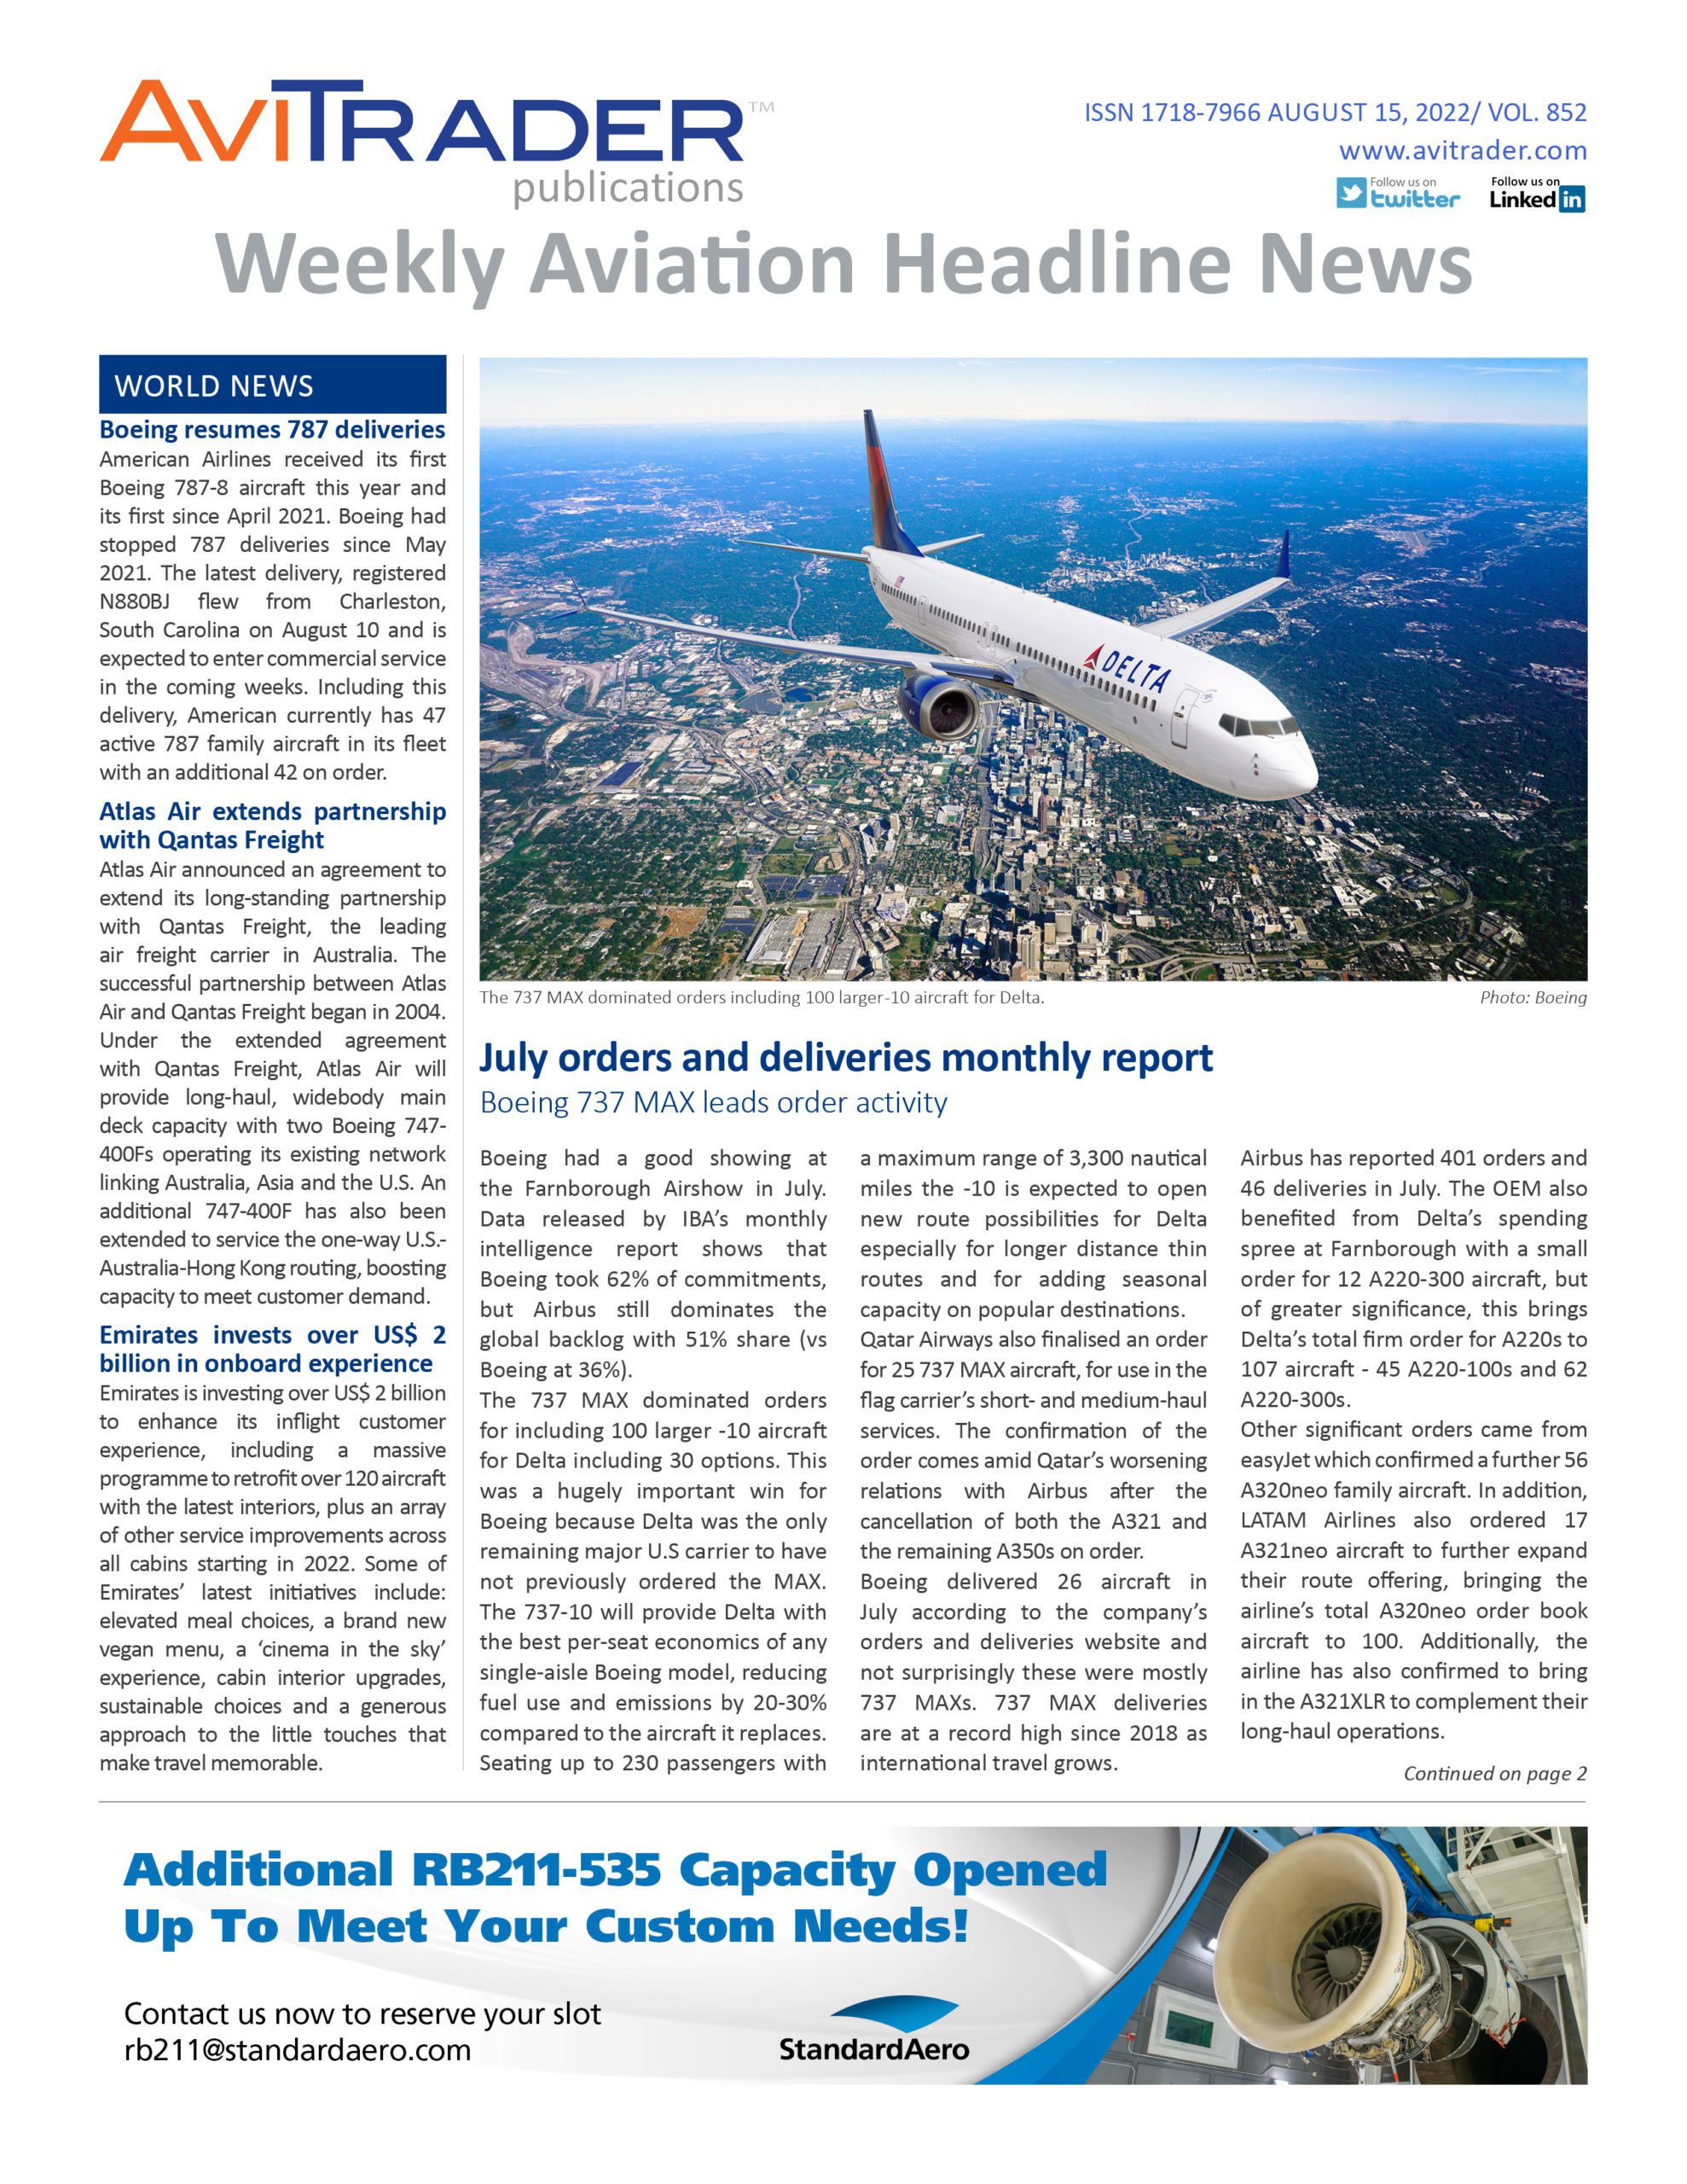 AviTrader_Weekly_Headline_News_Cover_2022-08-15